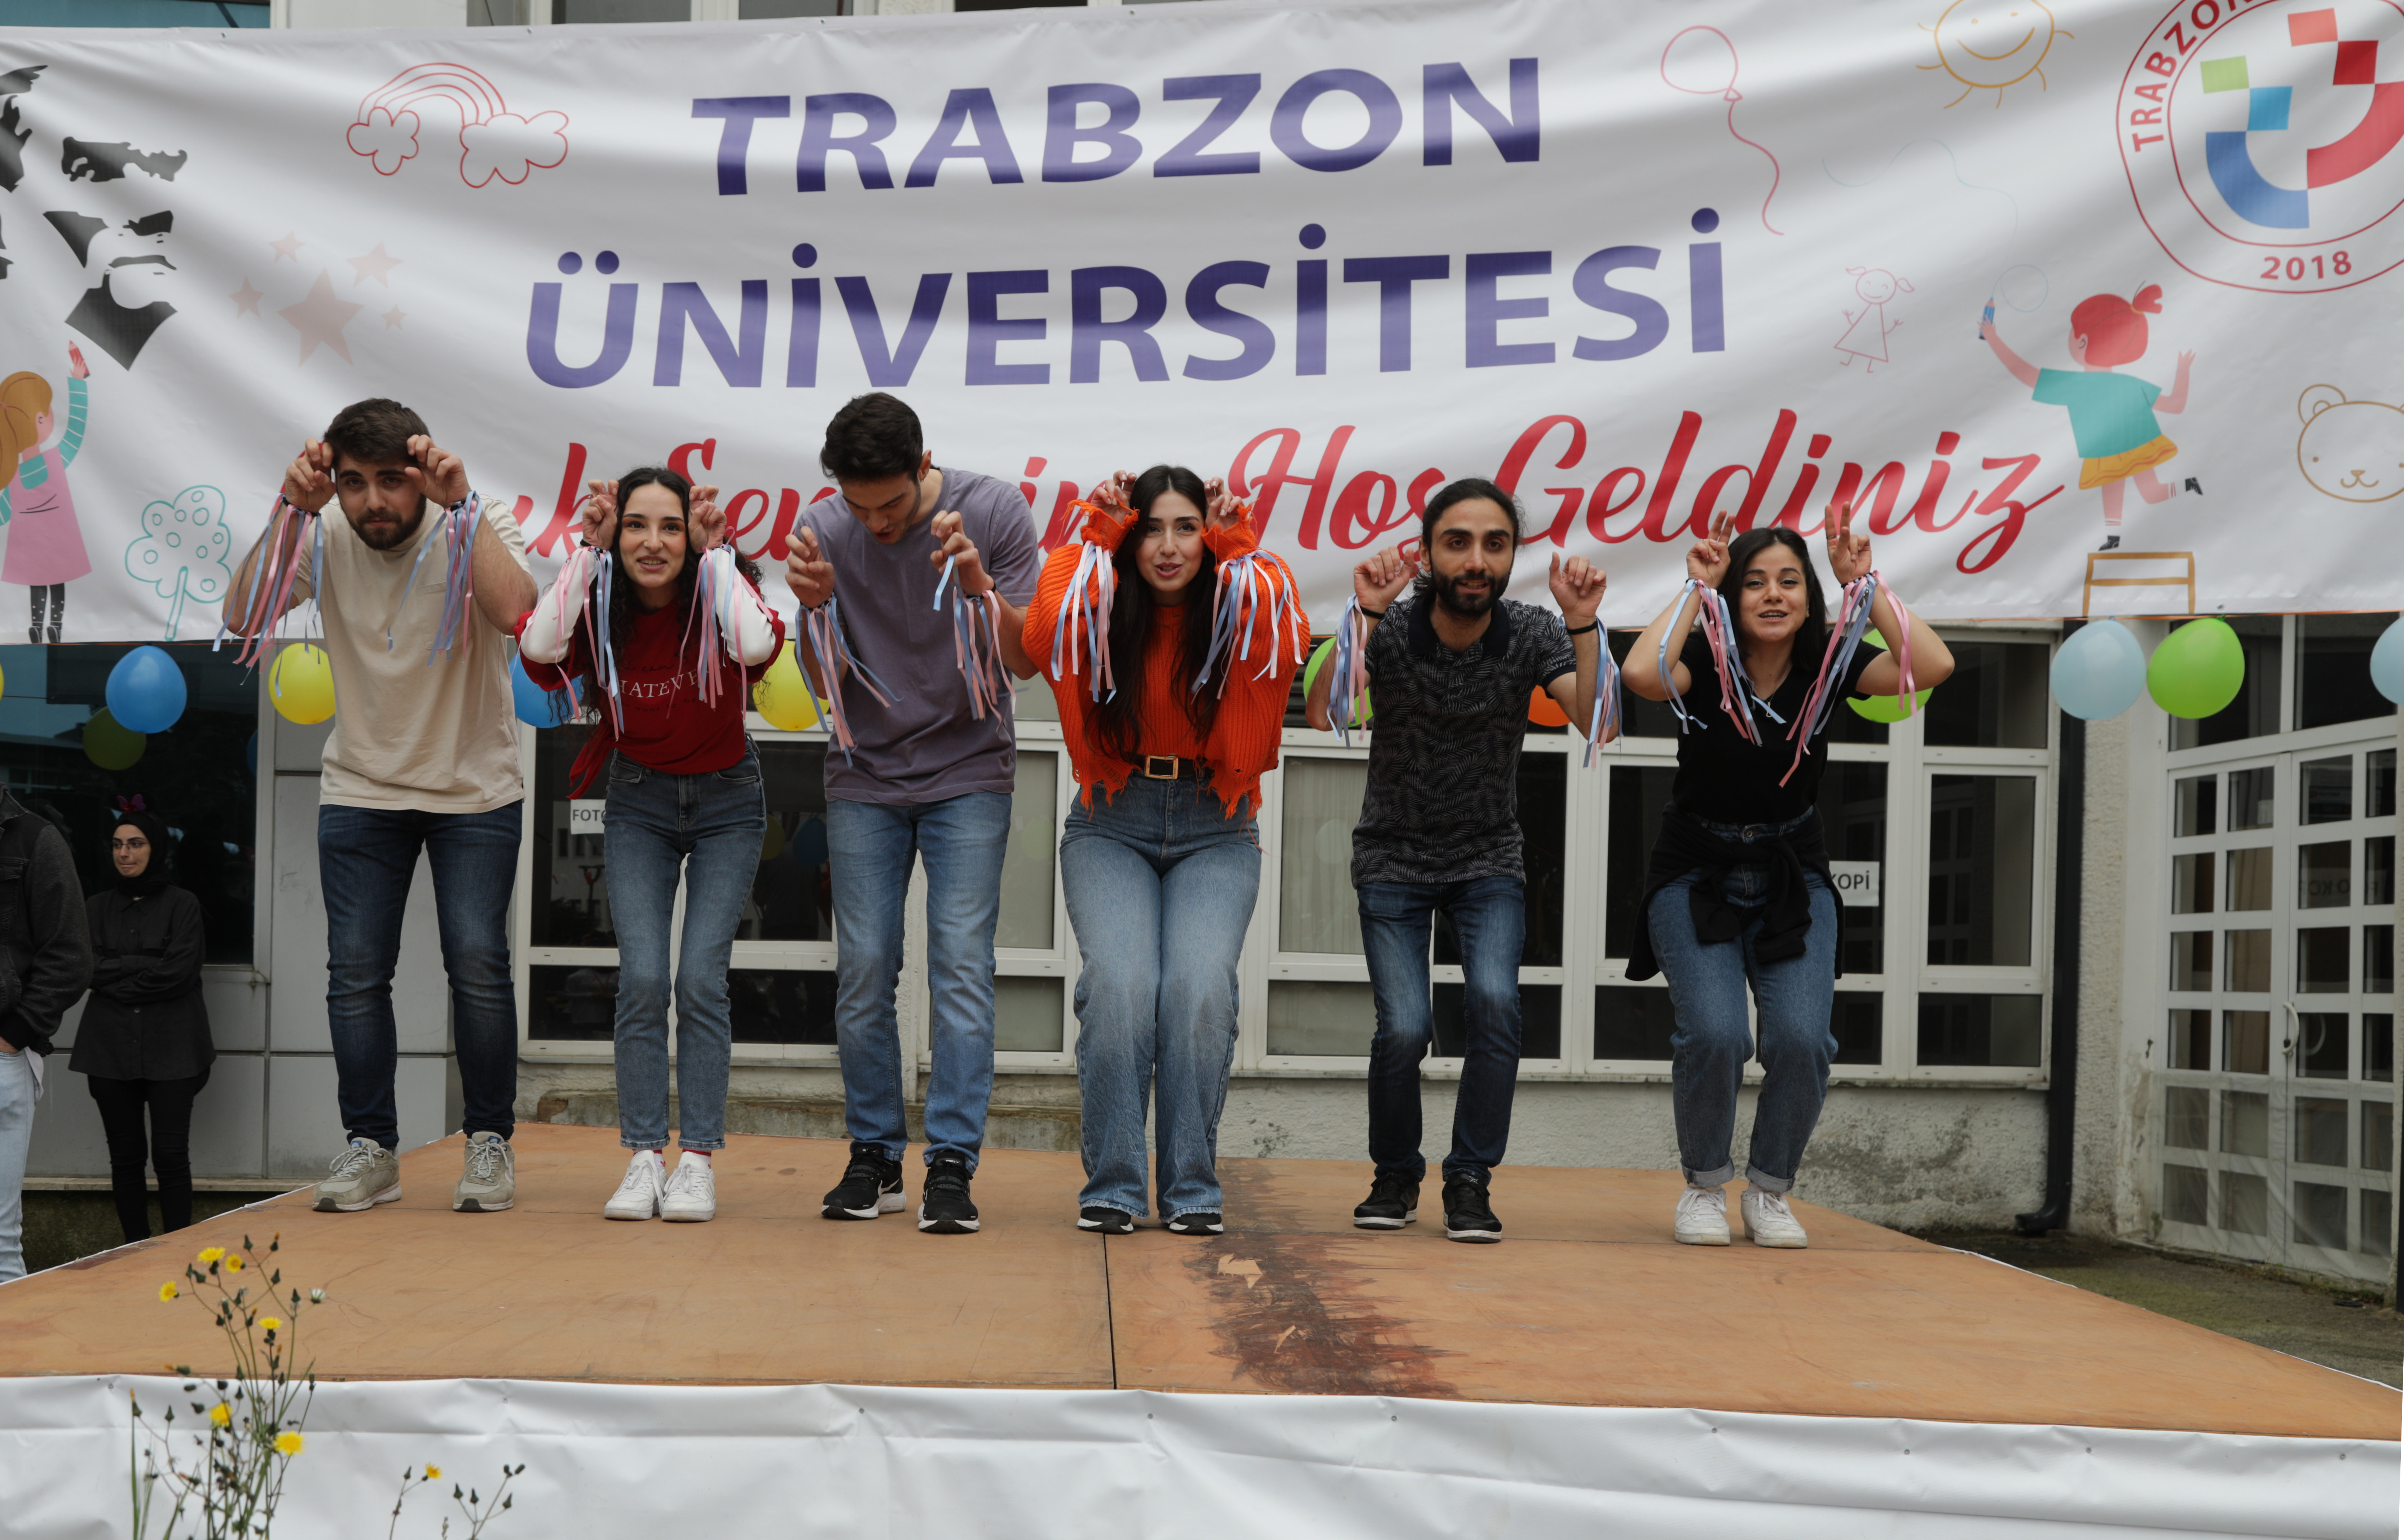 Trabzon niversitesinden Depremzede ocuklara zel enlik

